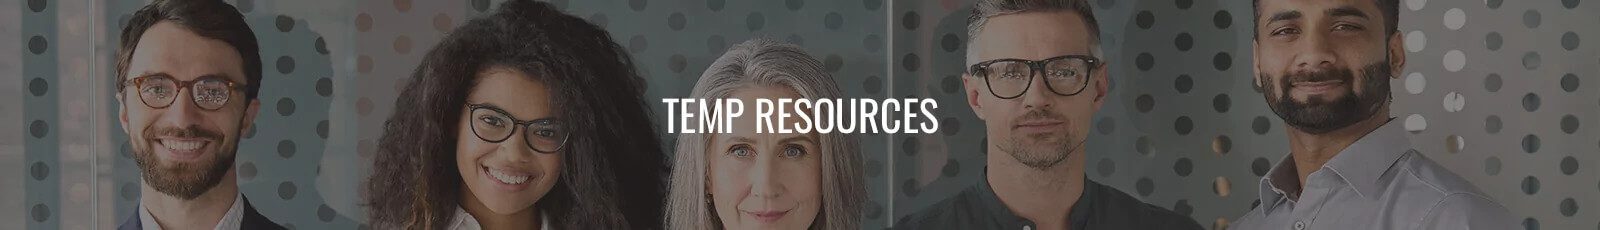 Temp Resources